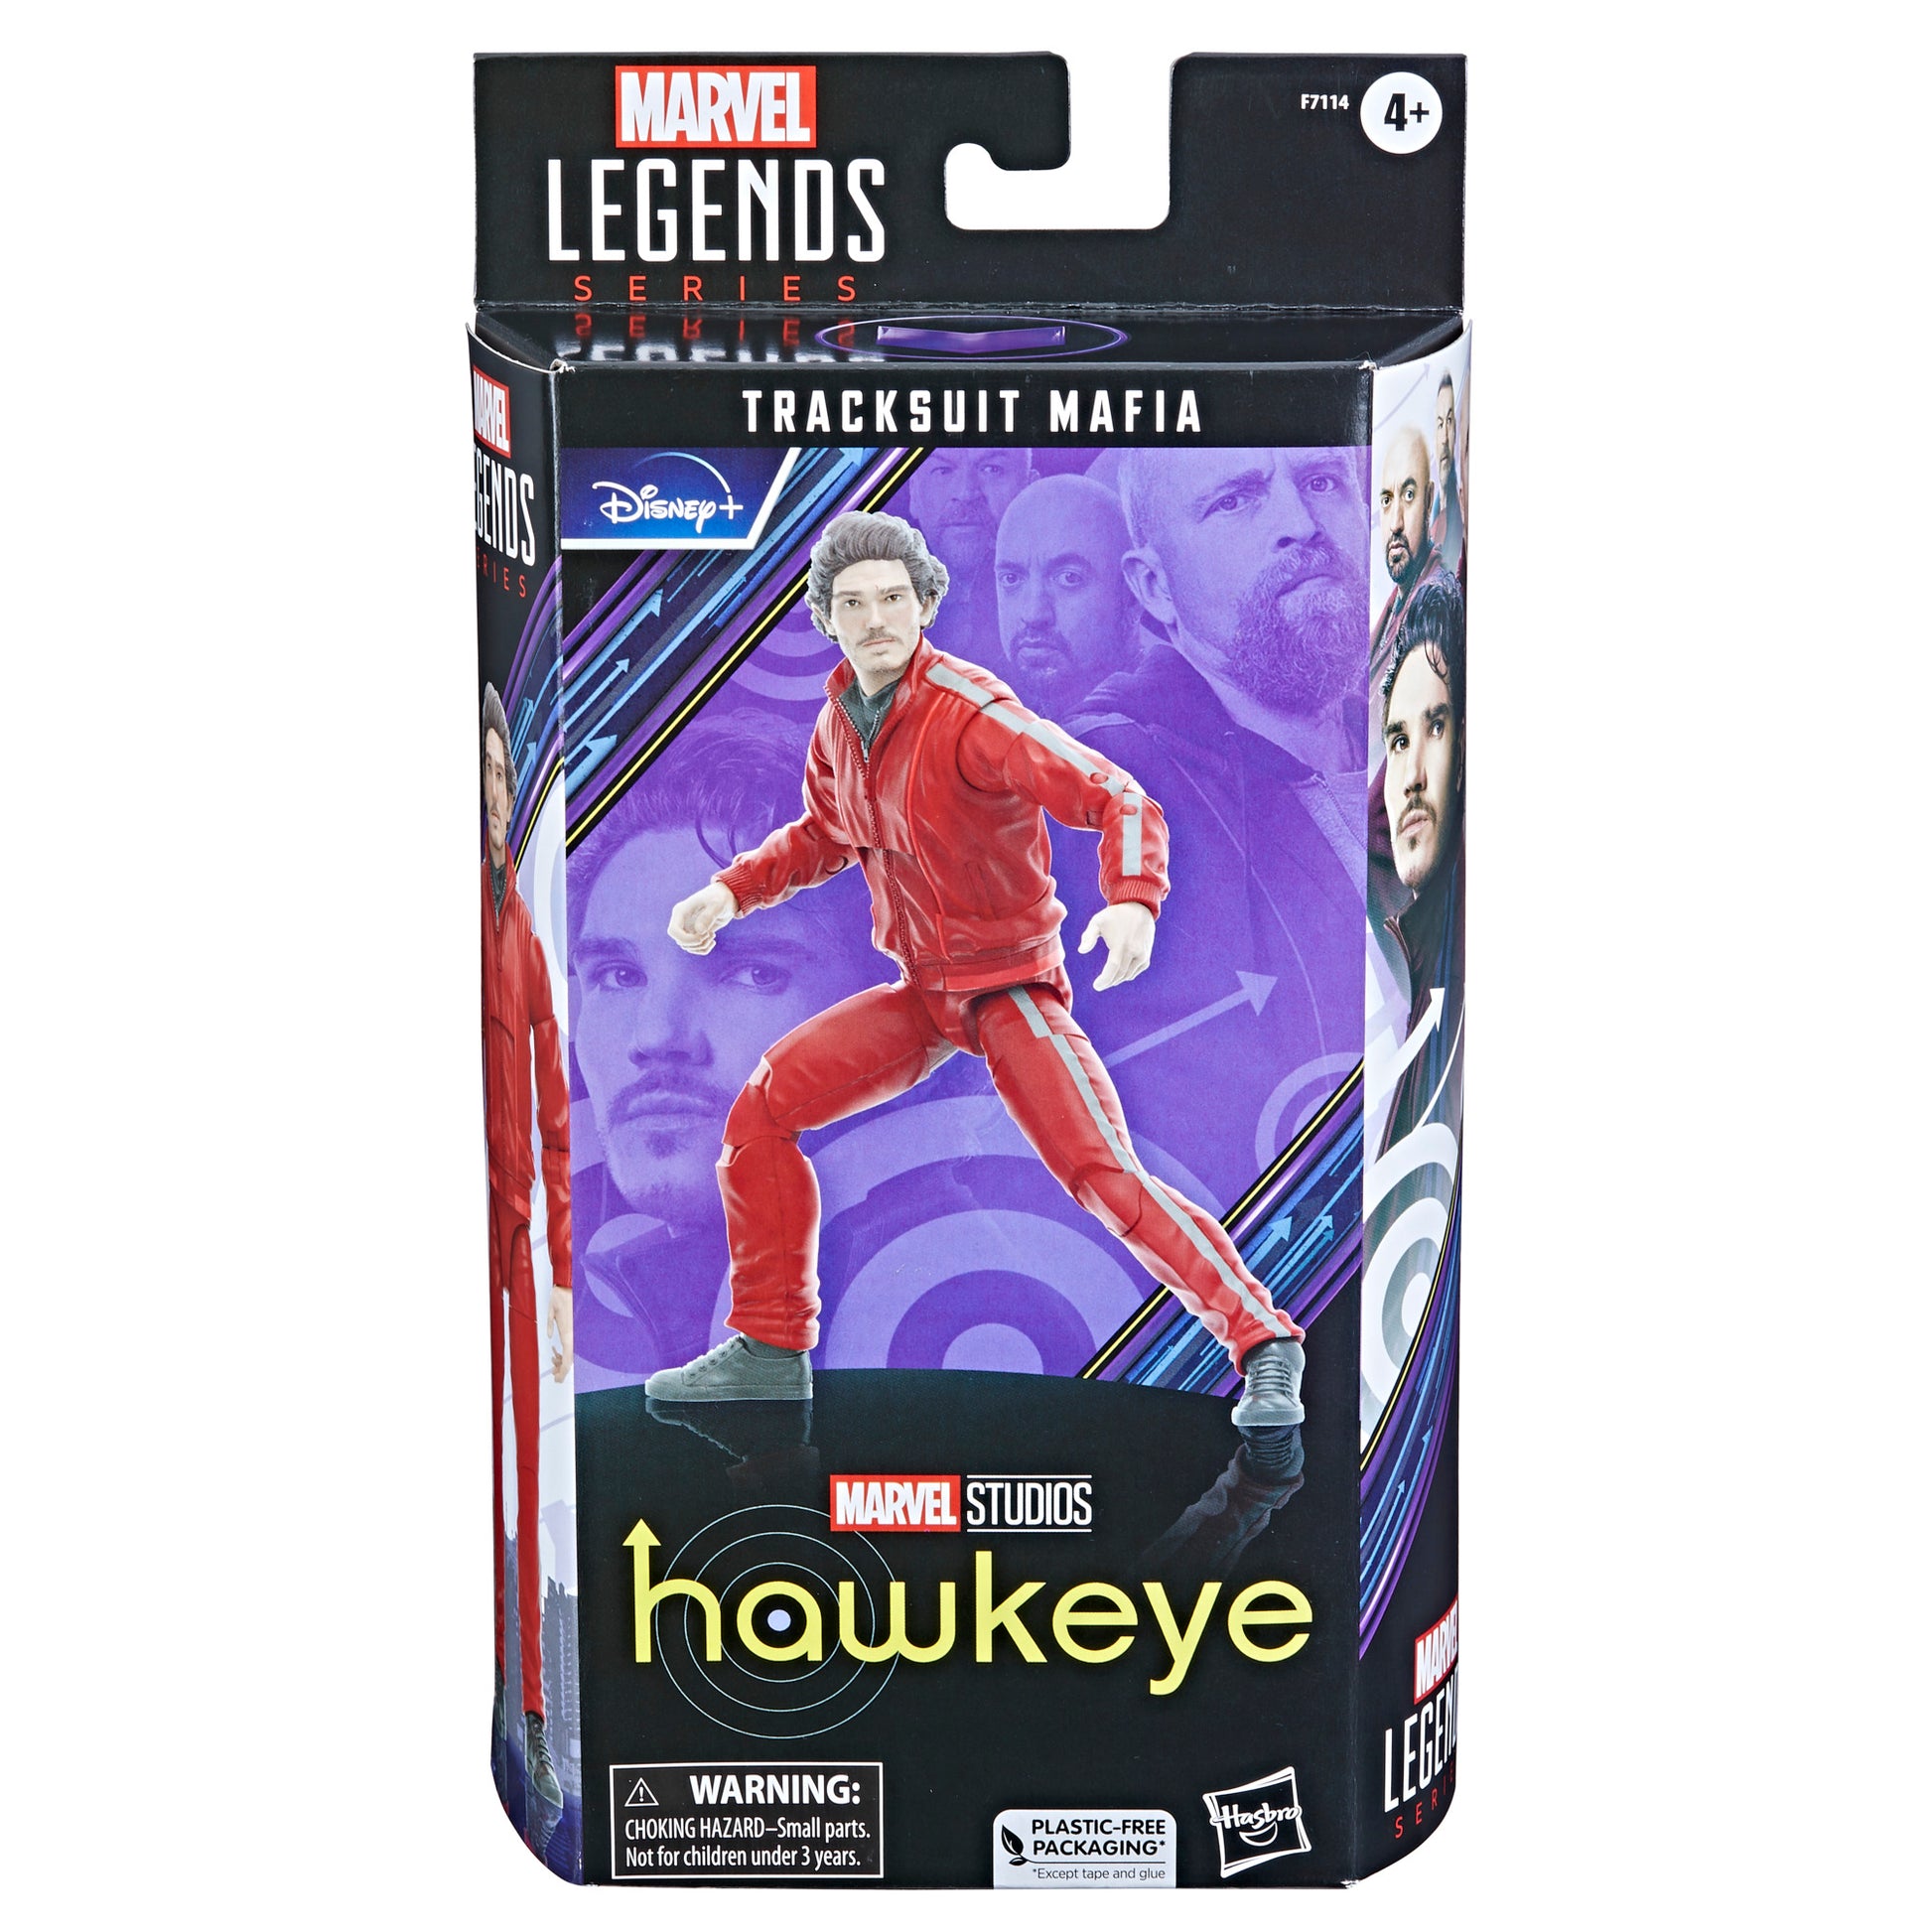 Marvel Legends Series Tracksuit Mafia, Hawkeye 6-Inch Action Figures